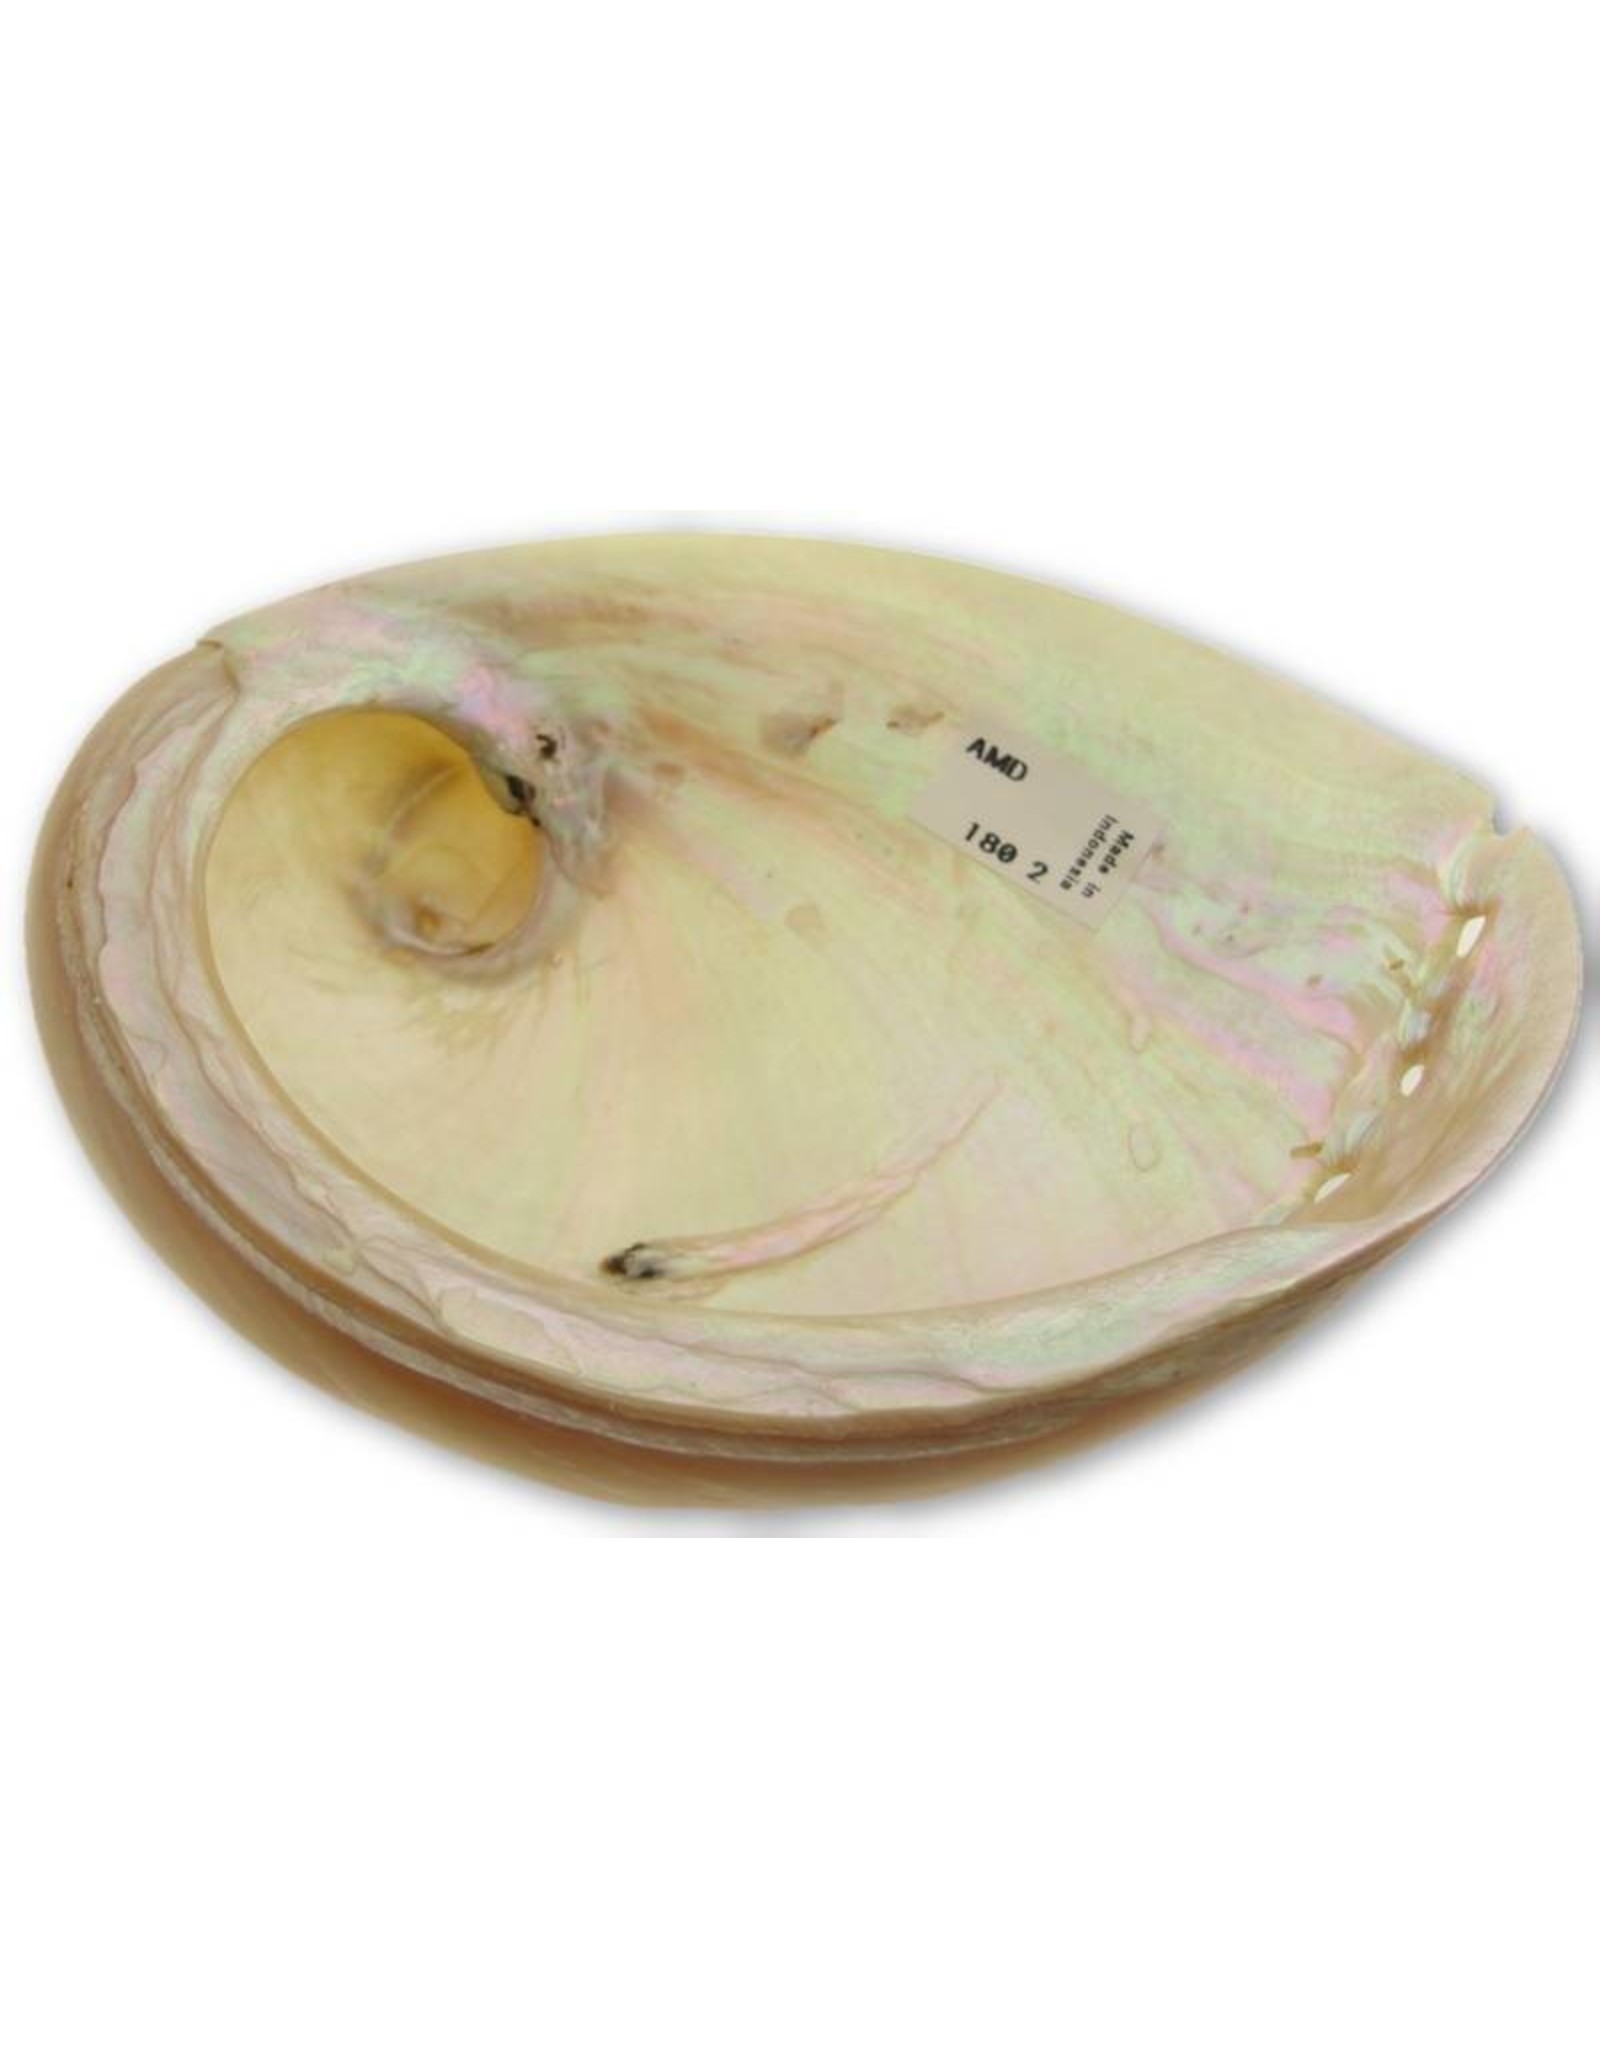 Abalone shell cream